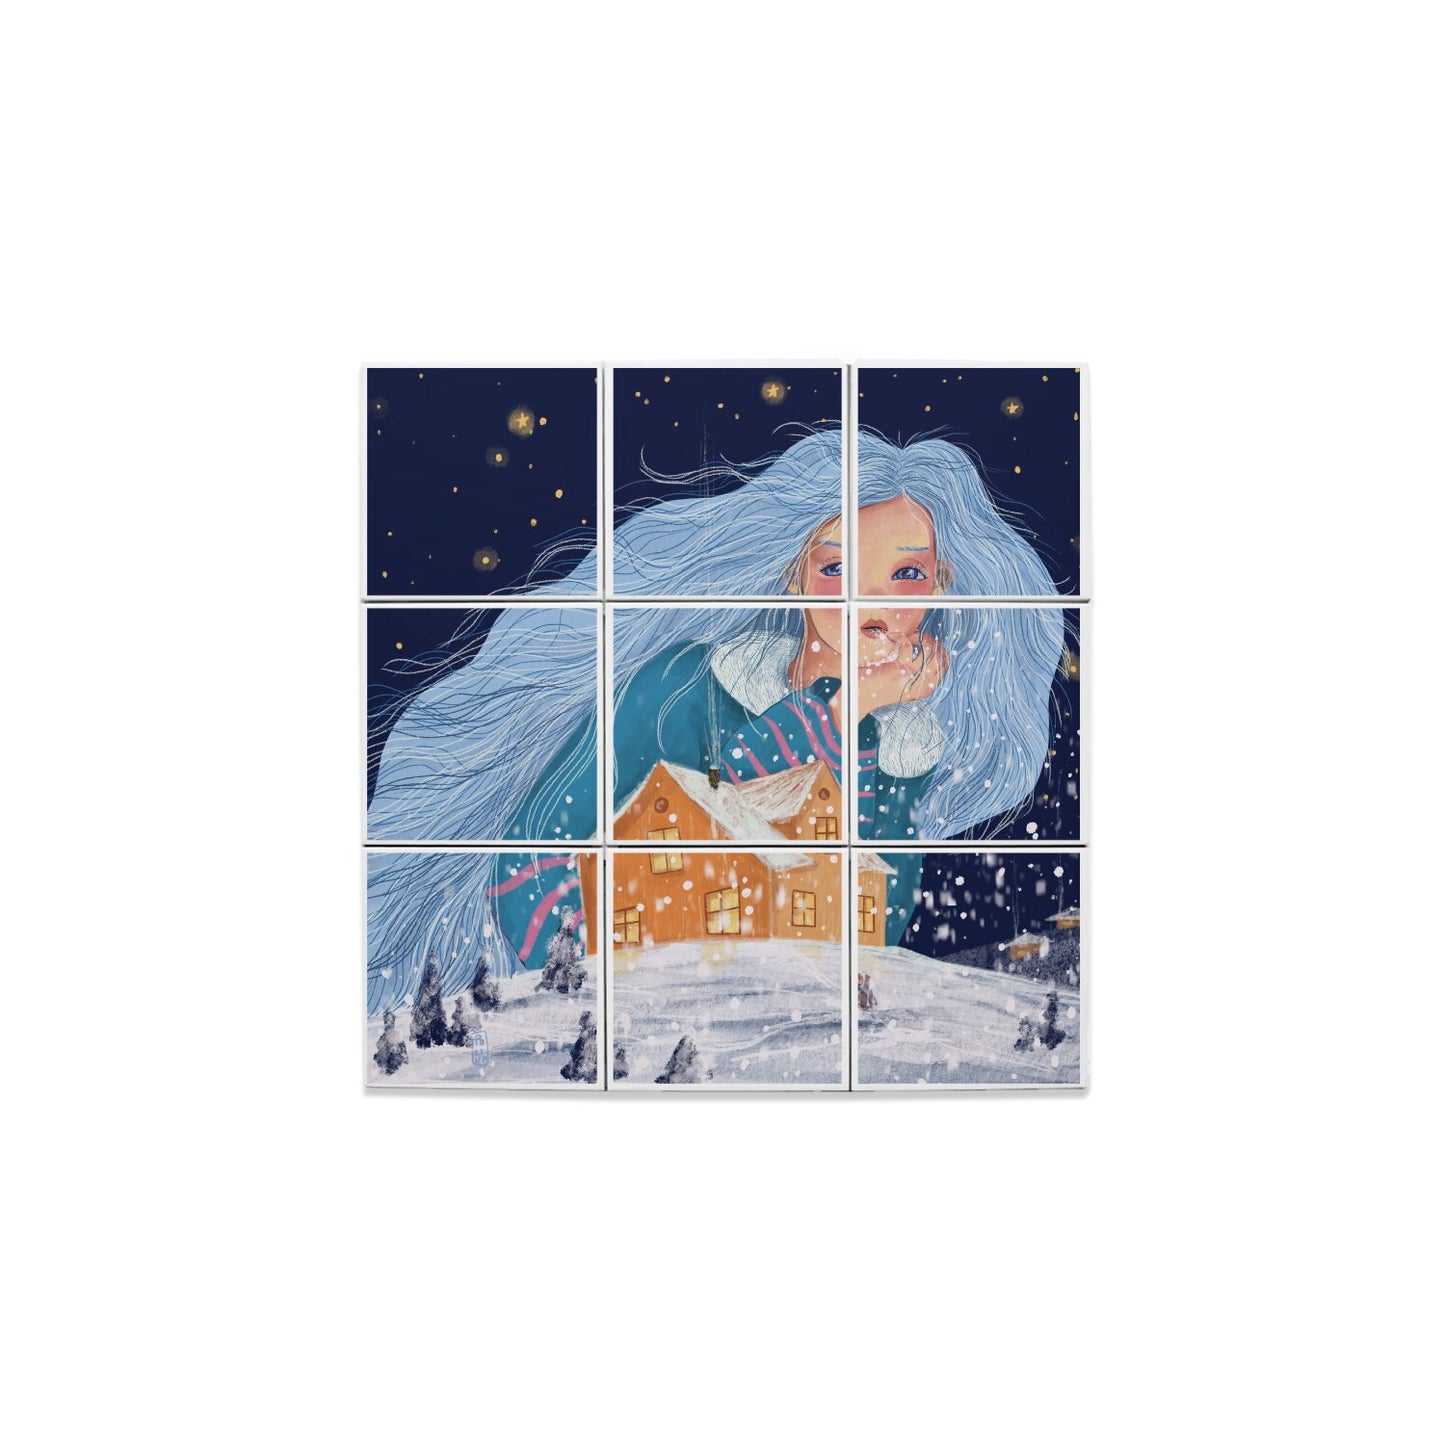 Ceramic Tiles - The Snow Maiden